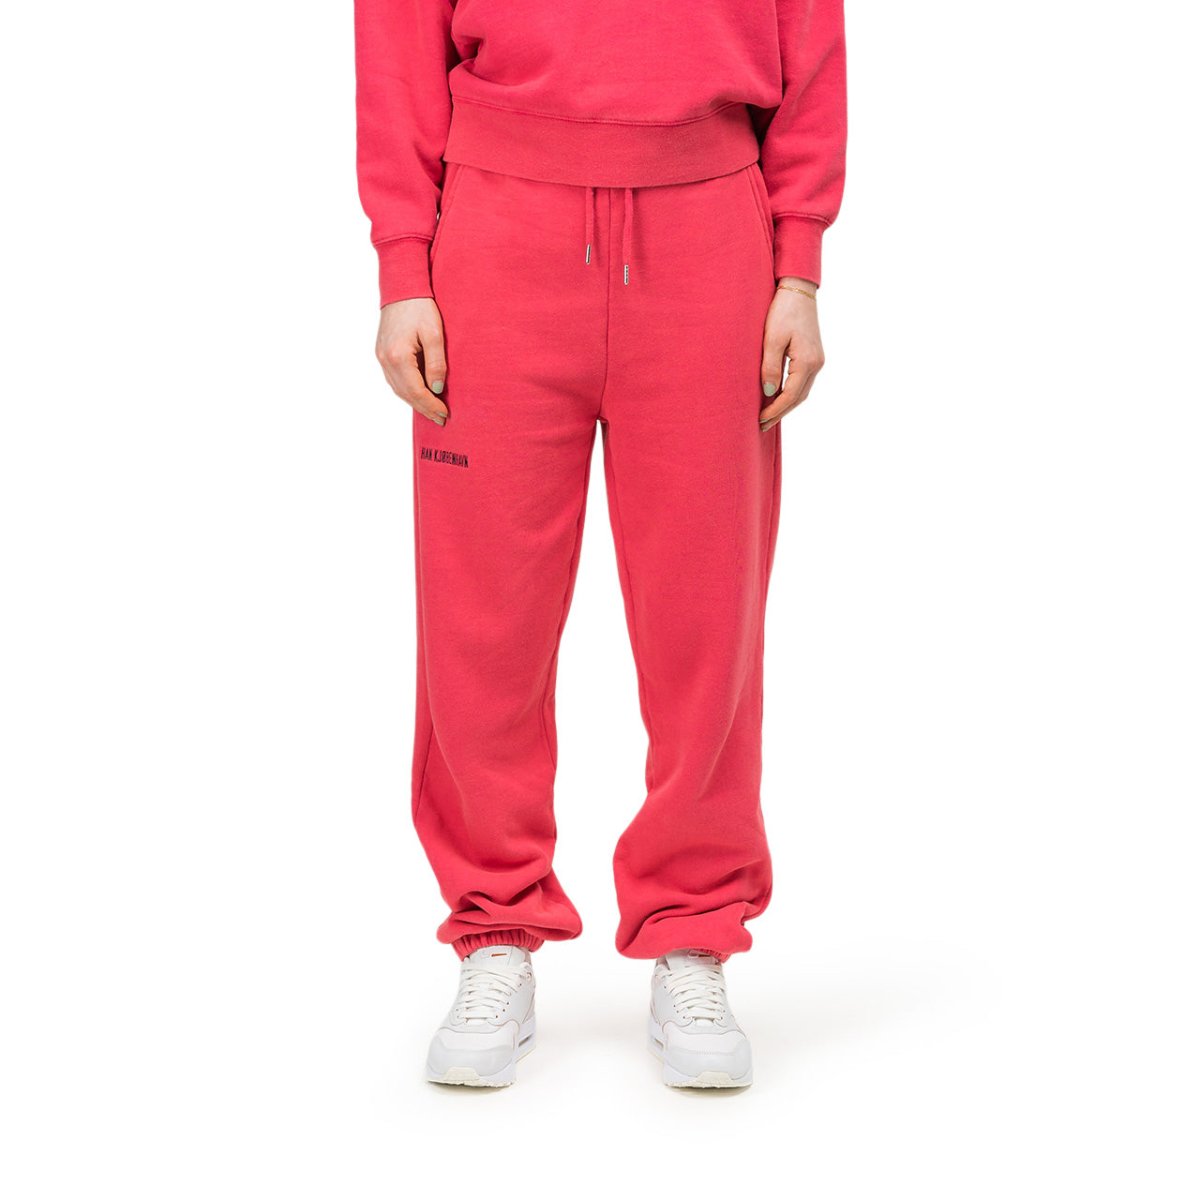 Image of Han Kjobenhavn Sweatpants (Pink)